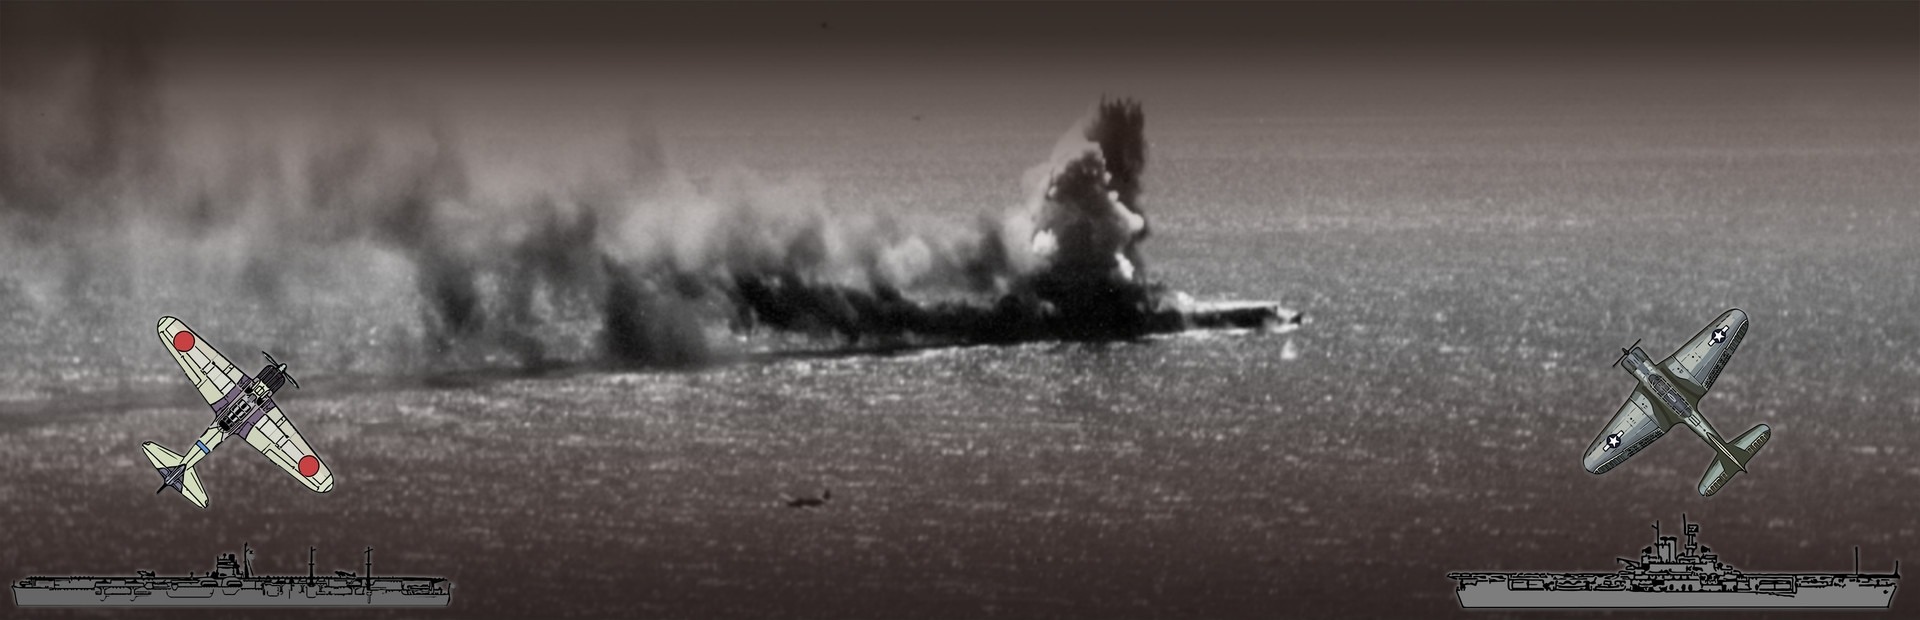 Carrier Battles 4 Guadalcanal - Battaglie navali durante la guerra del Pacifico